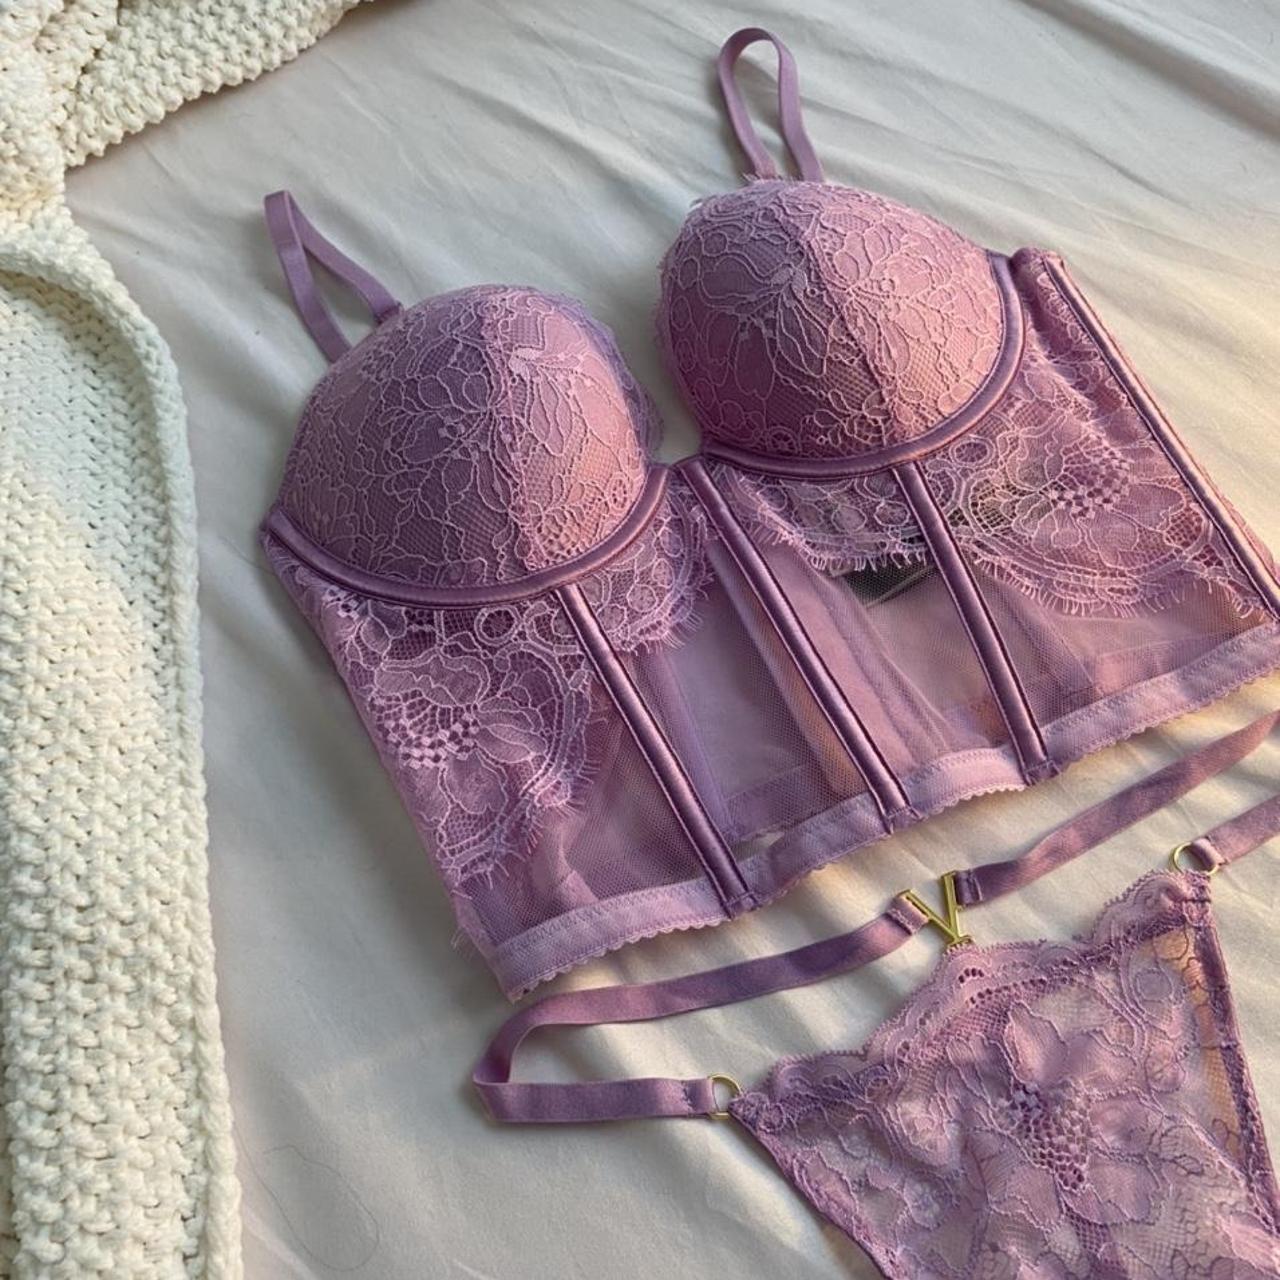 beautiful vs lingerie set 🌸💜💜, never worn/ size 32C